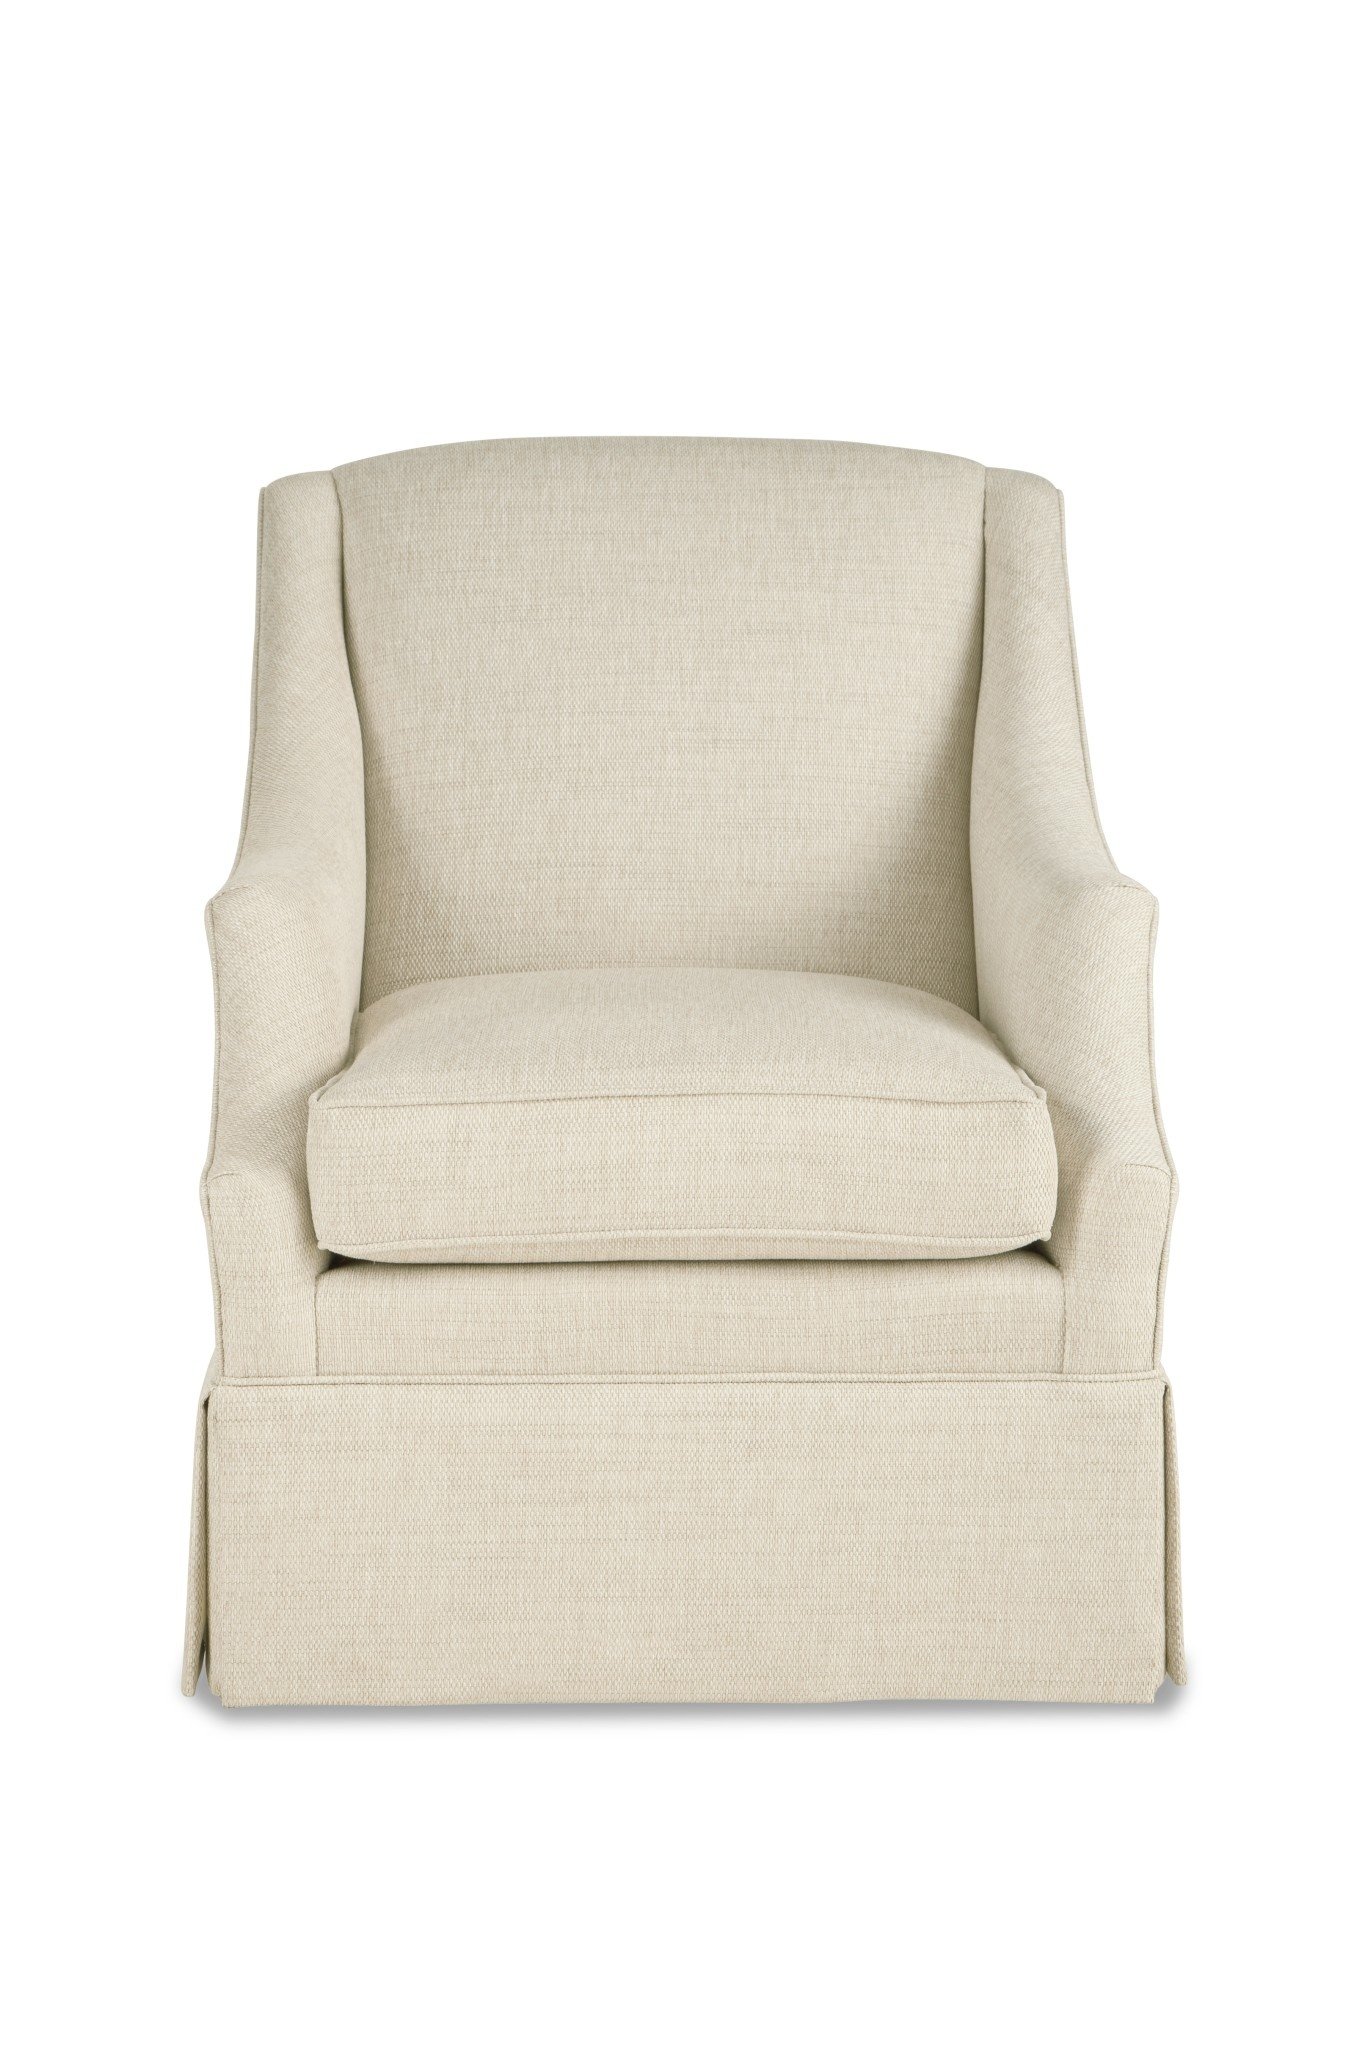 Craftmaster Furniture 030610SC Swivel Chair